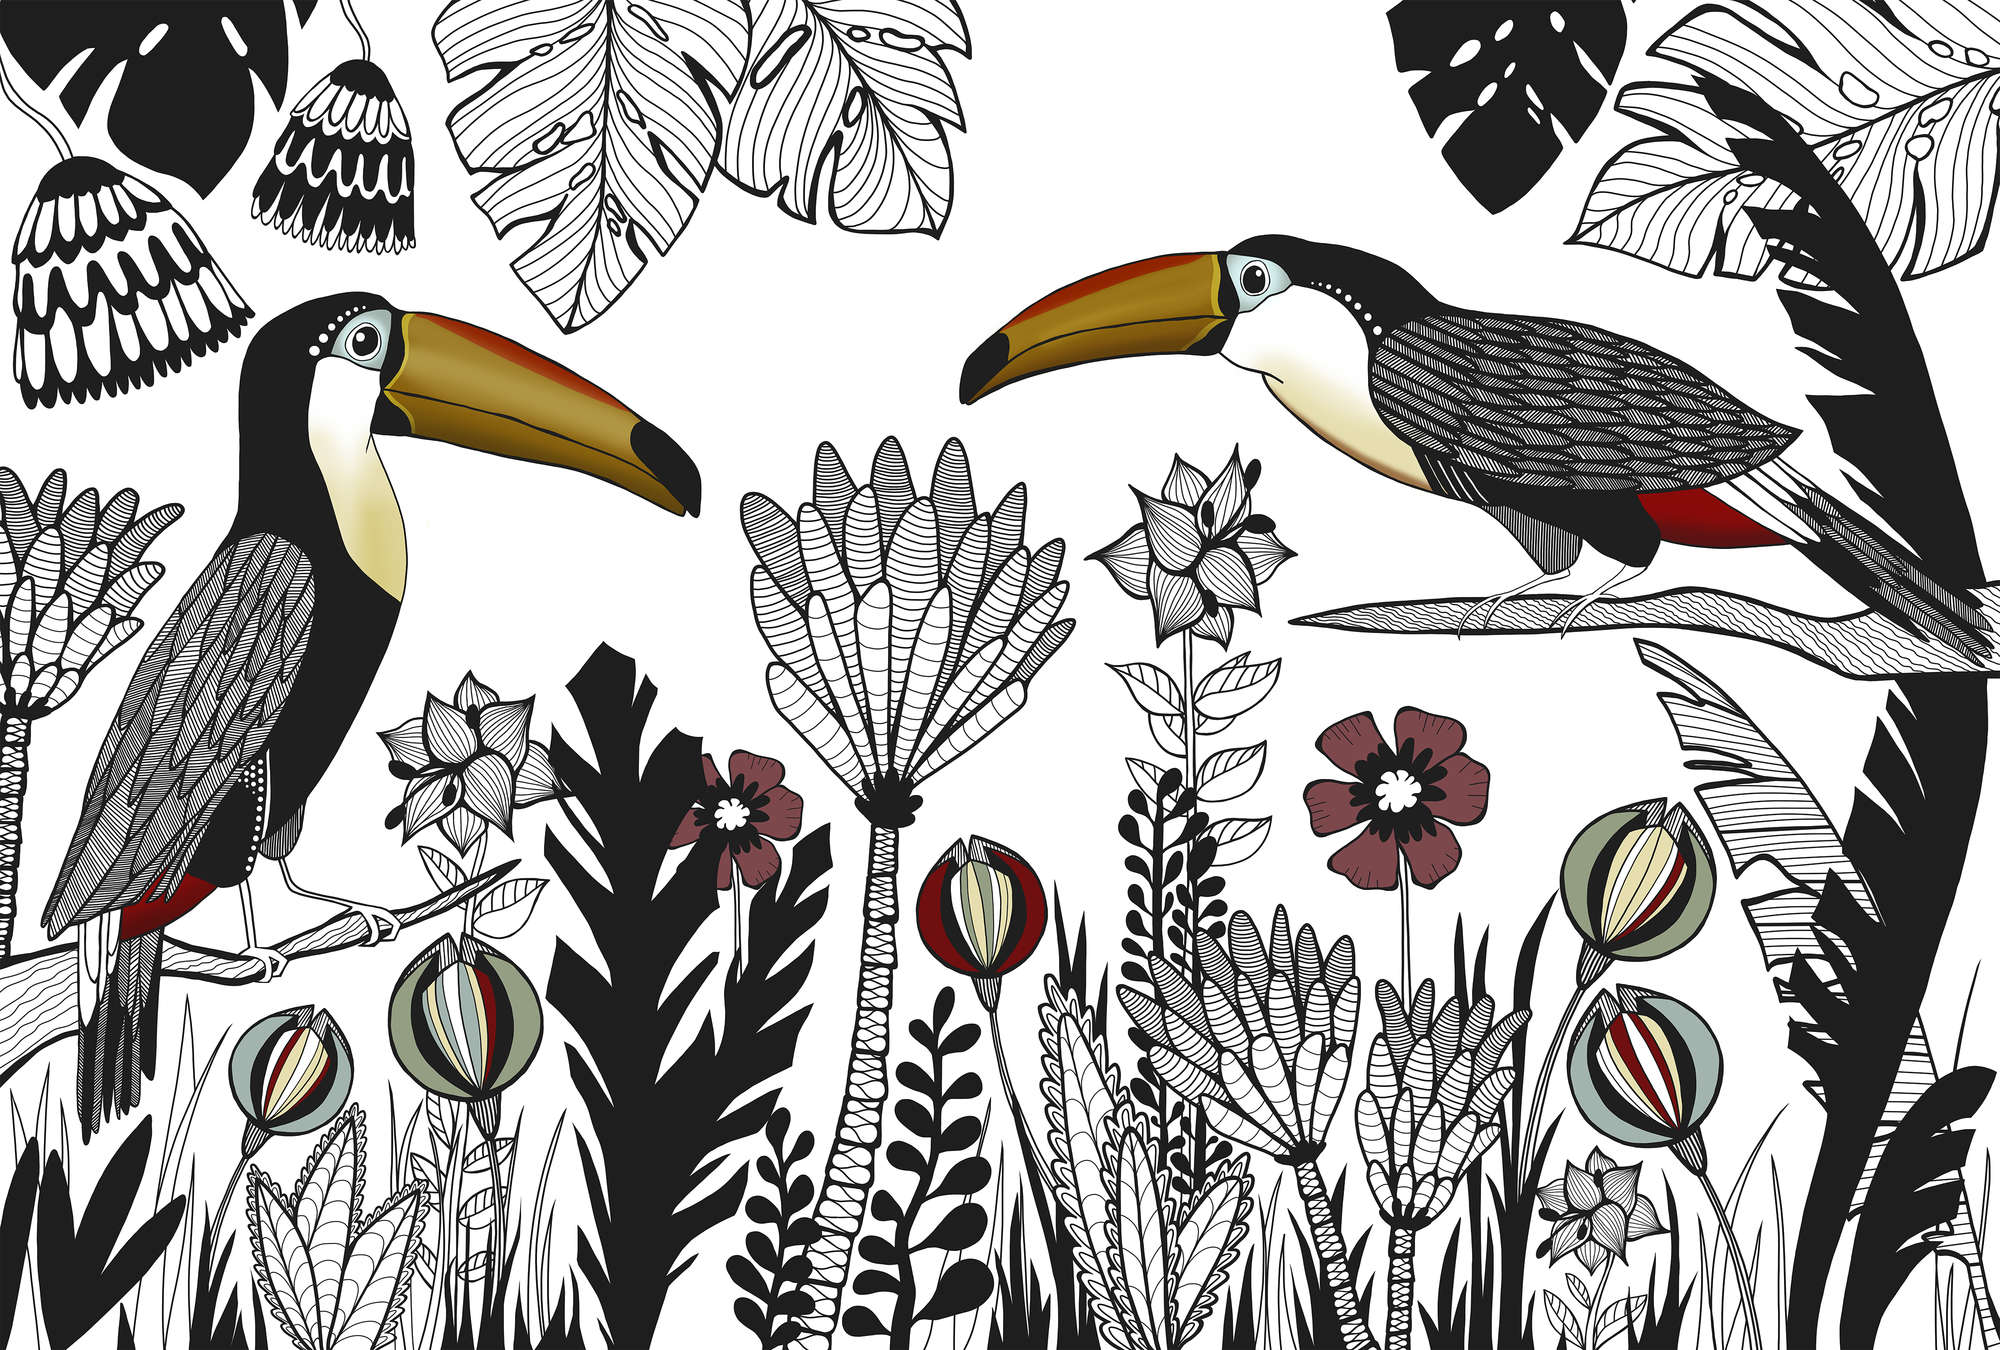             Tucán mural de aves con patrón tropical en estilo de dibujo
        